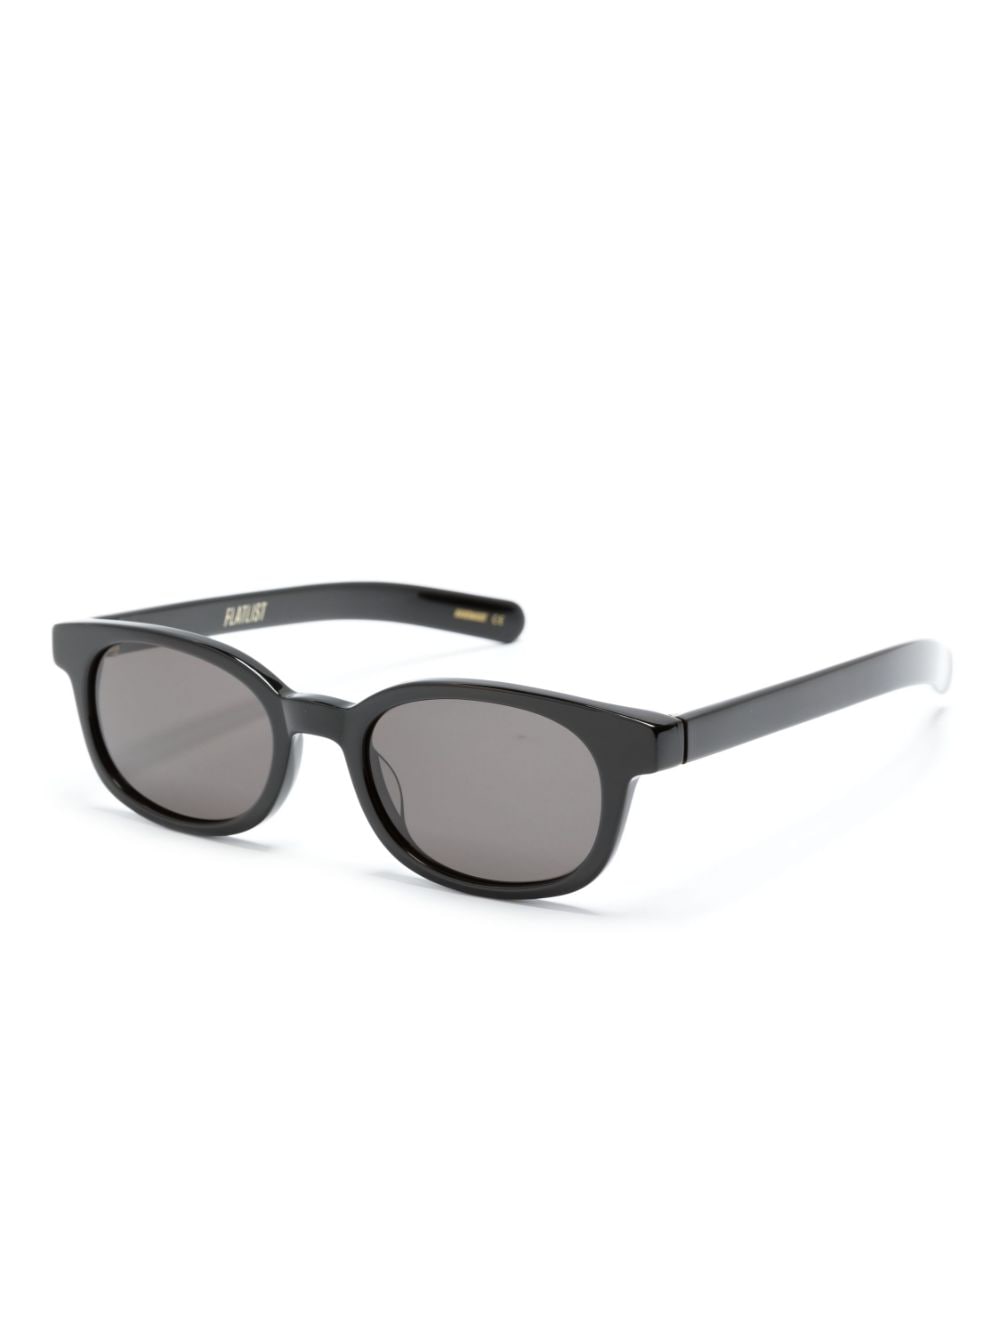 FLATLIST tinted round-frame sunglasses - Zwart